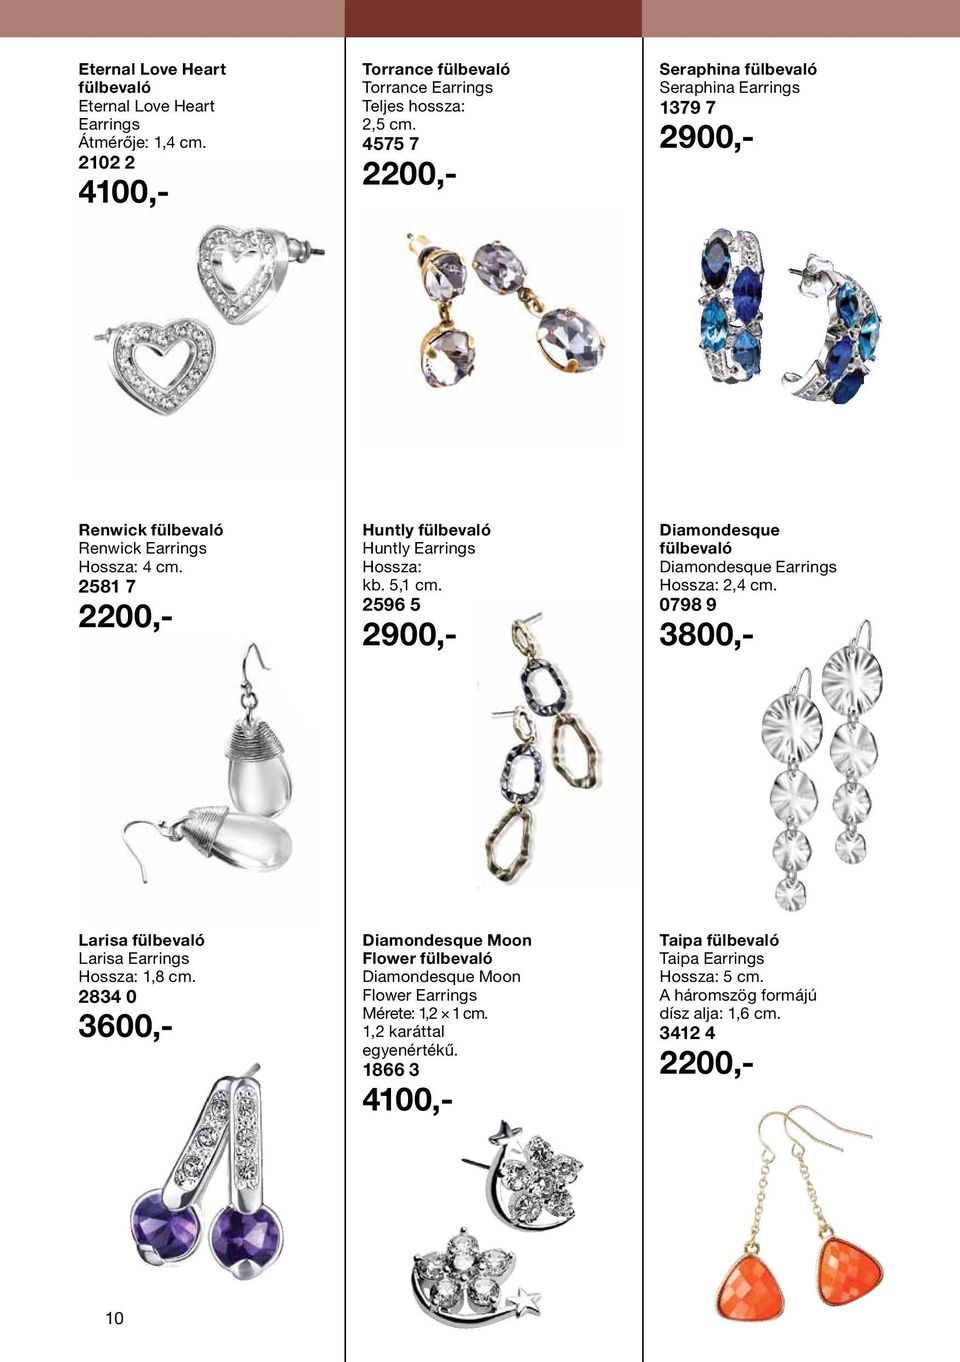 5,1 cm. 2596 5 2900,- Diamondesque fülbevaló Diamondesque Earrings Hossza: 2,4 cm. 0798 9 3800,- Larisa fülbevaló Larisa Earrings Hossza: 1,8 cm.